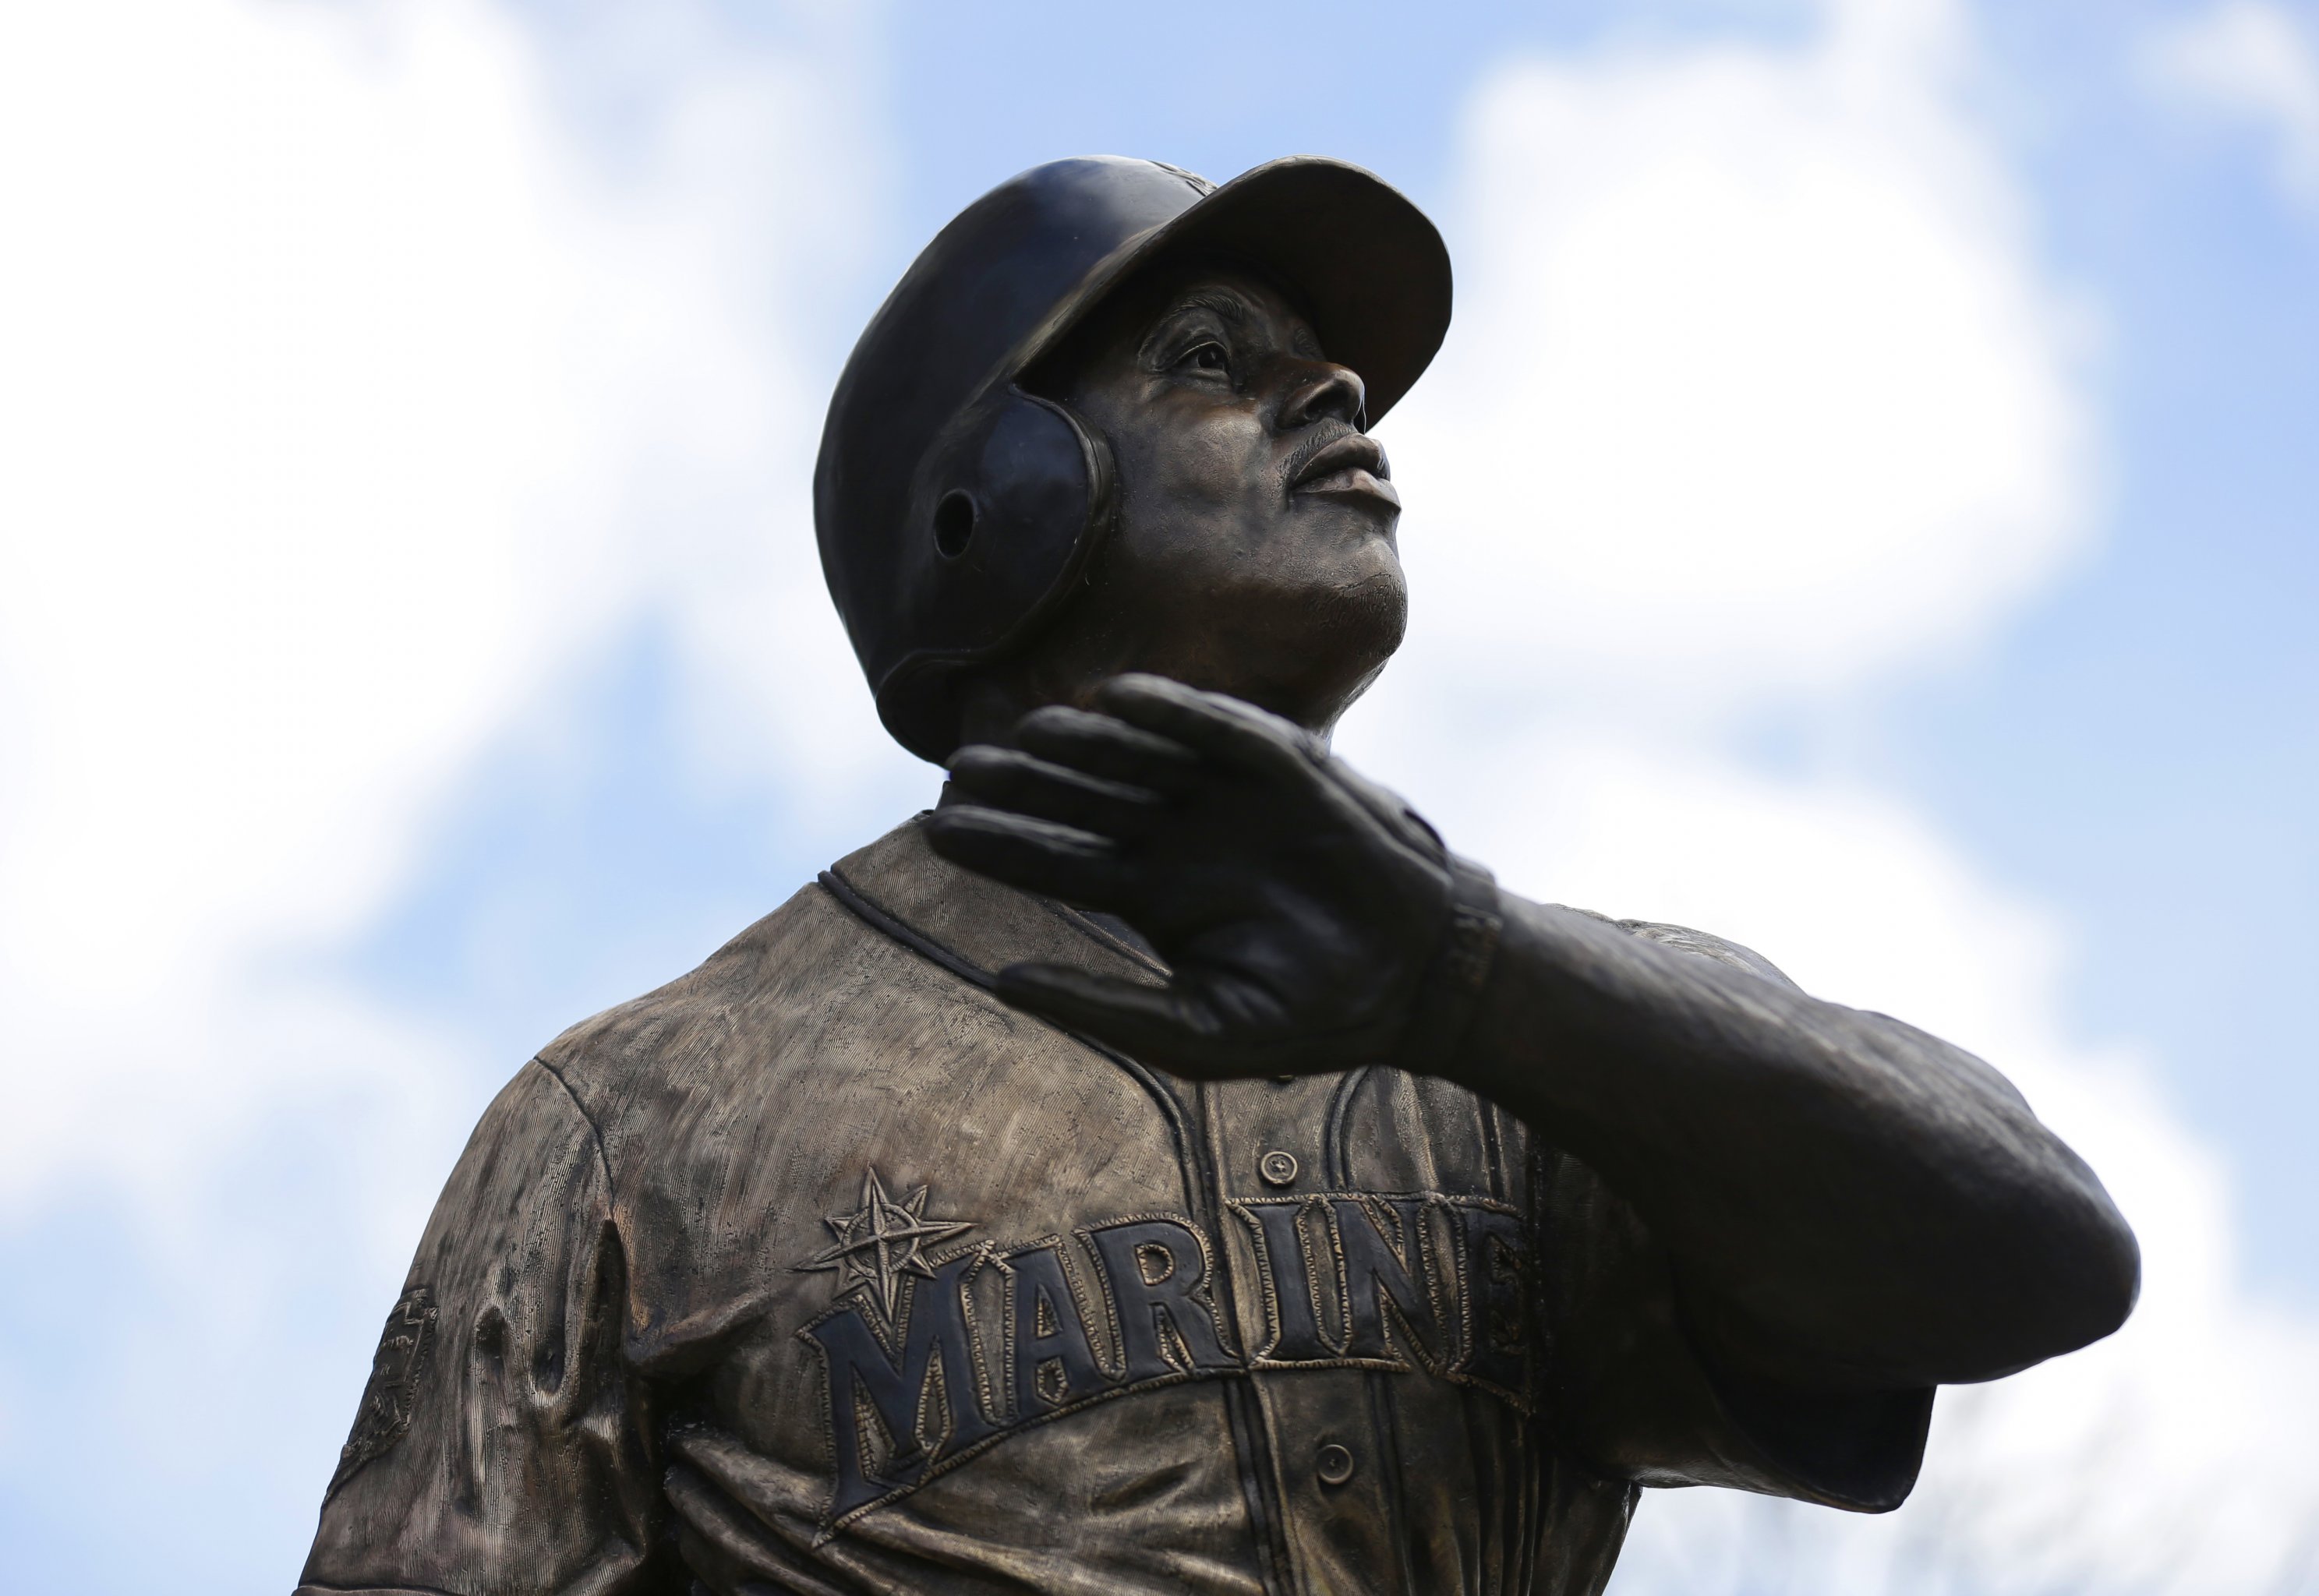 Griffey Jr. baseball's last transcendent icon